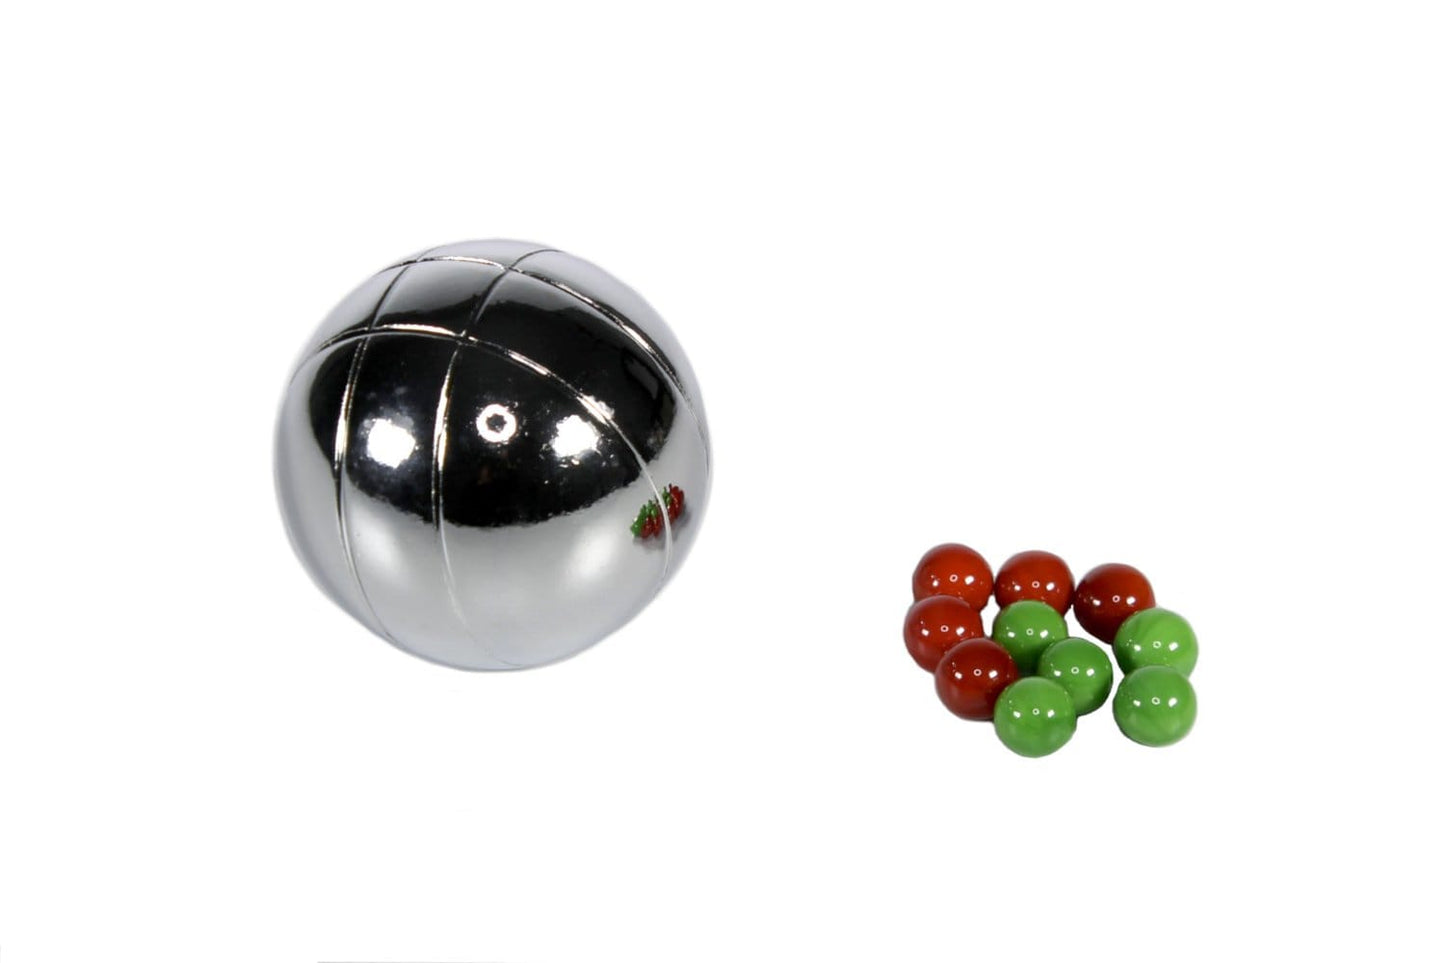 Energy Ball (UFO Ball) - Arbor Scientific